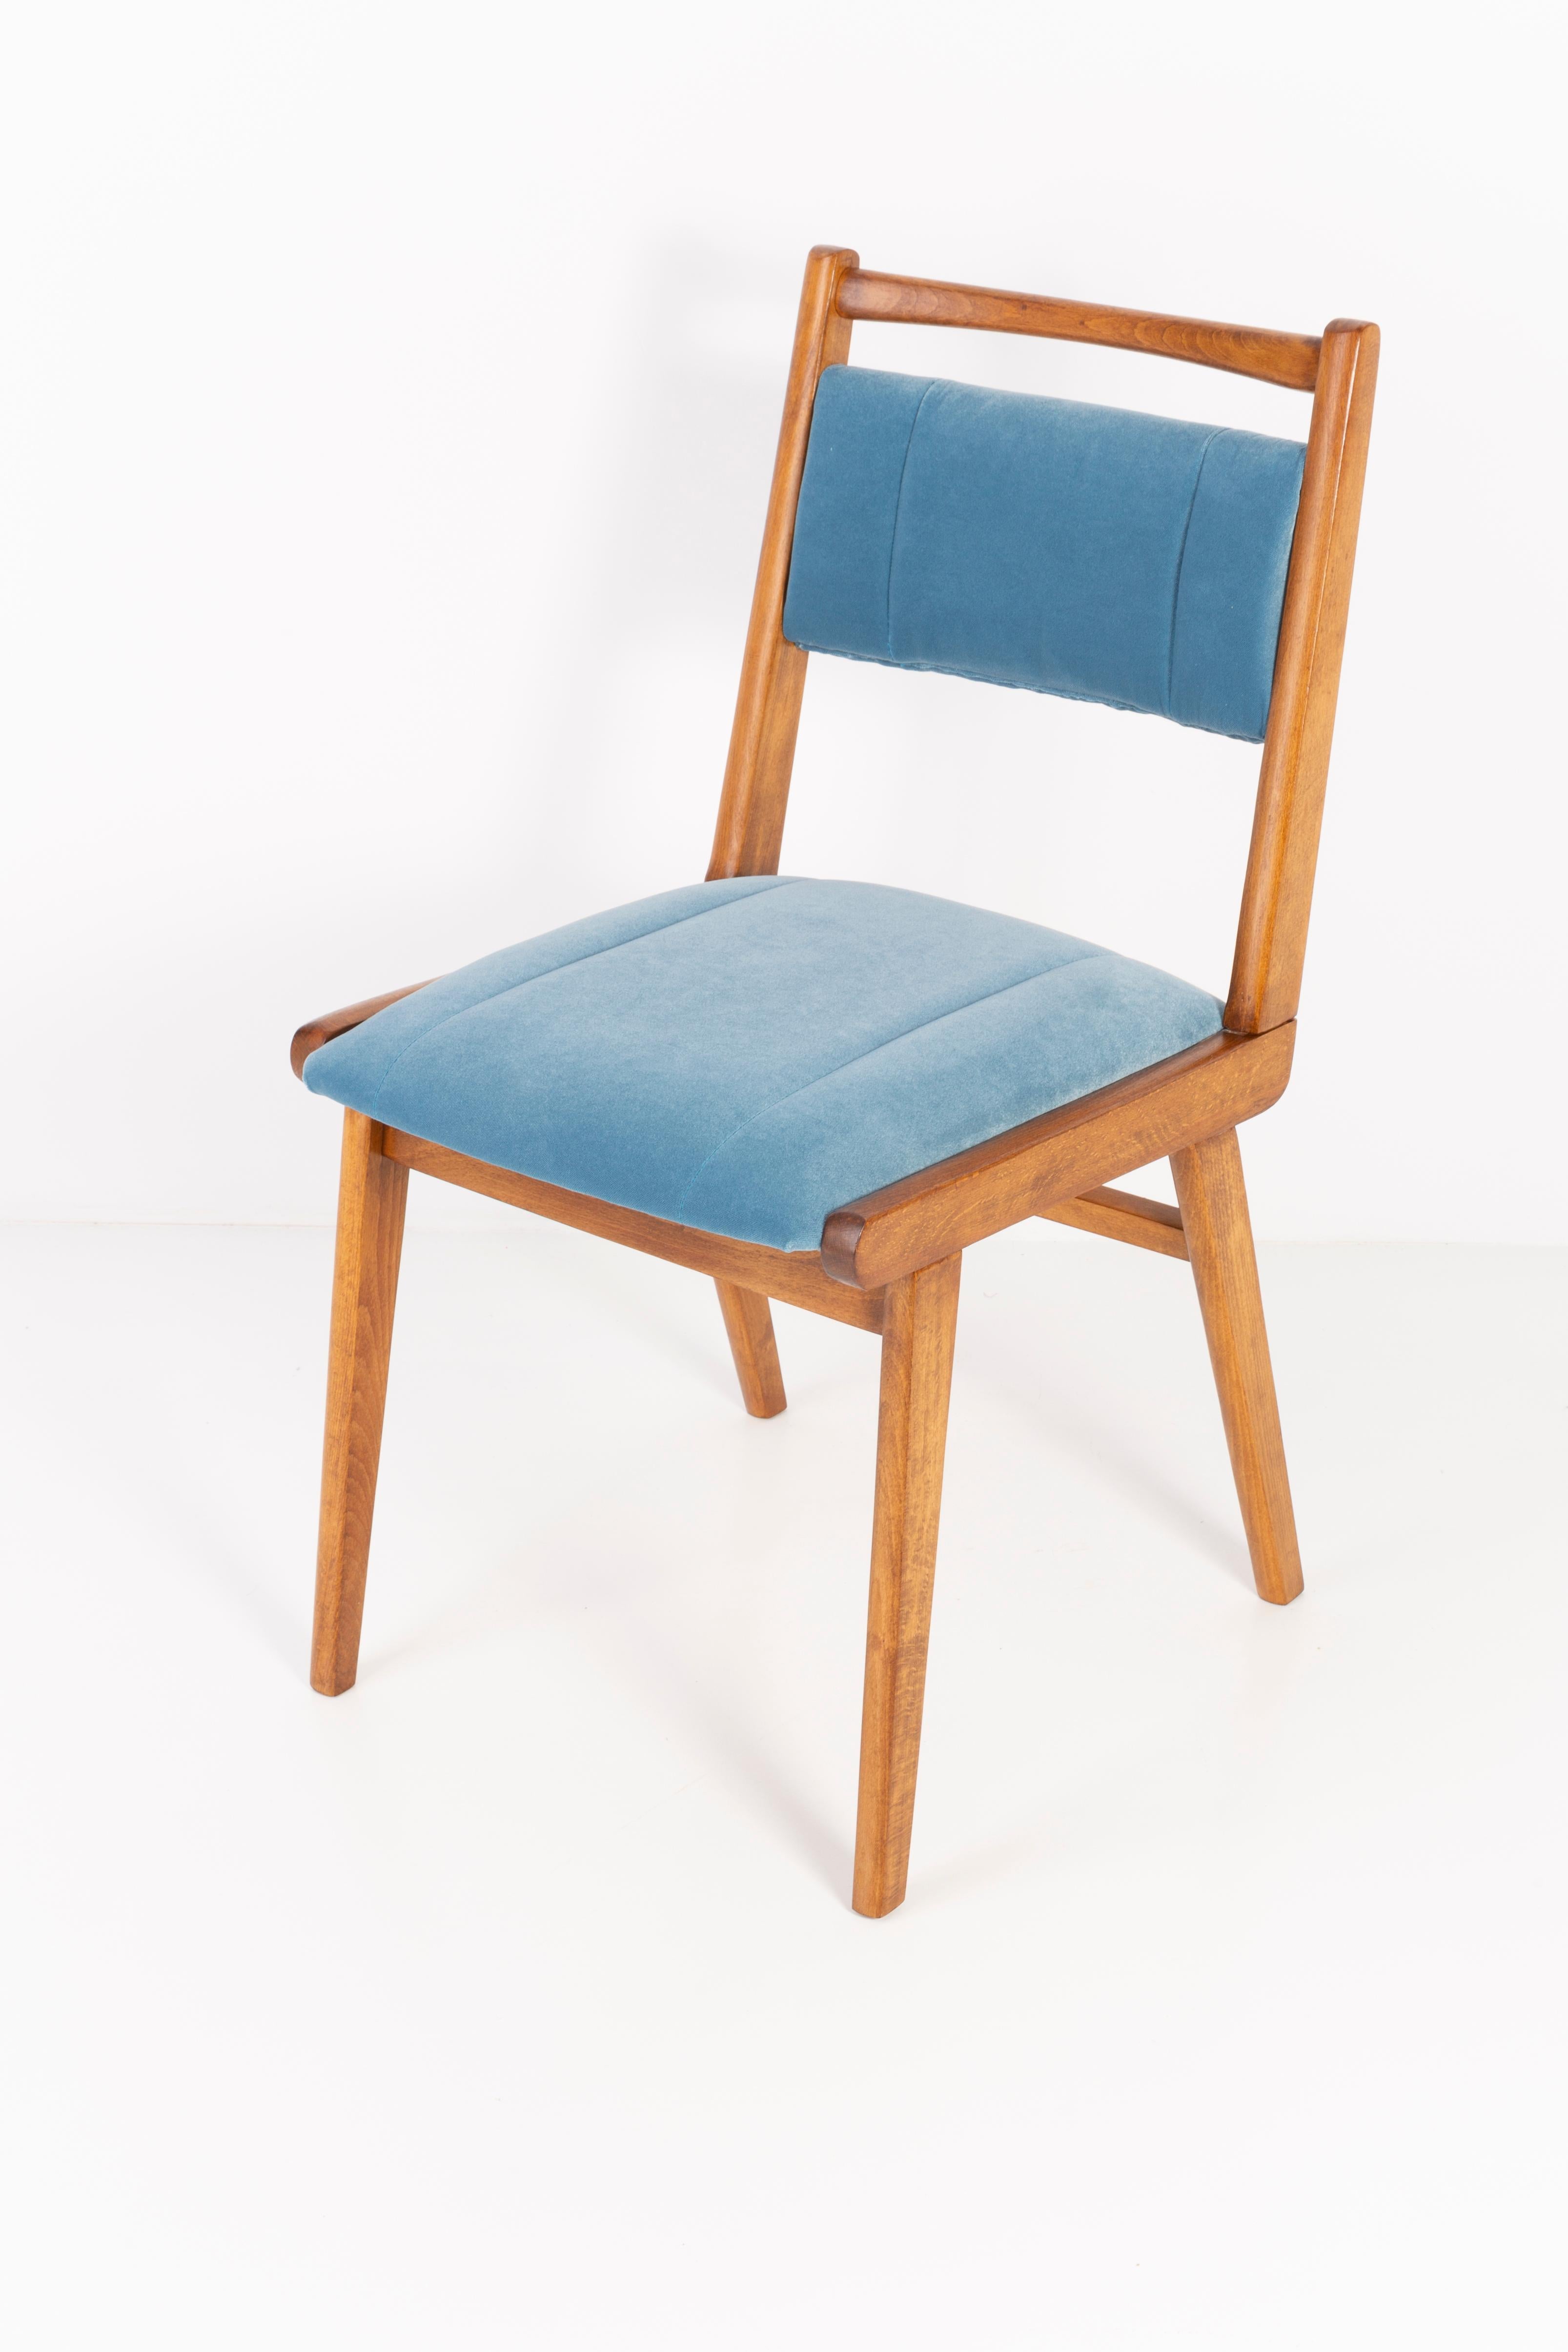 Six 20th Century Blue Velvet Chairs, Poland, 1960s For Sale 2